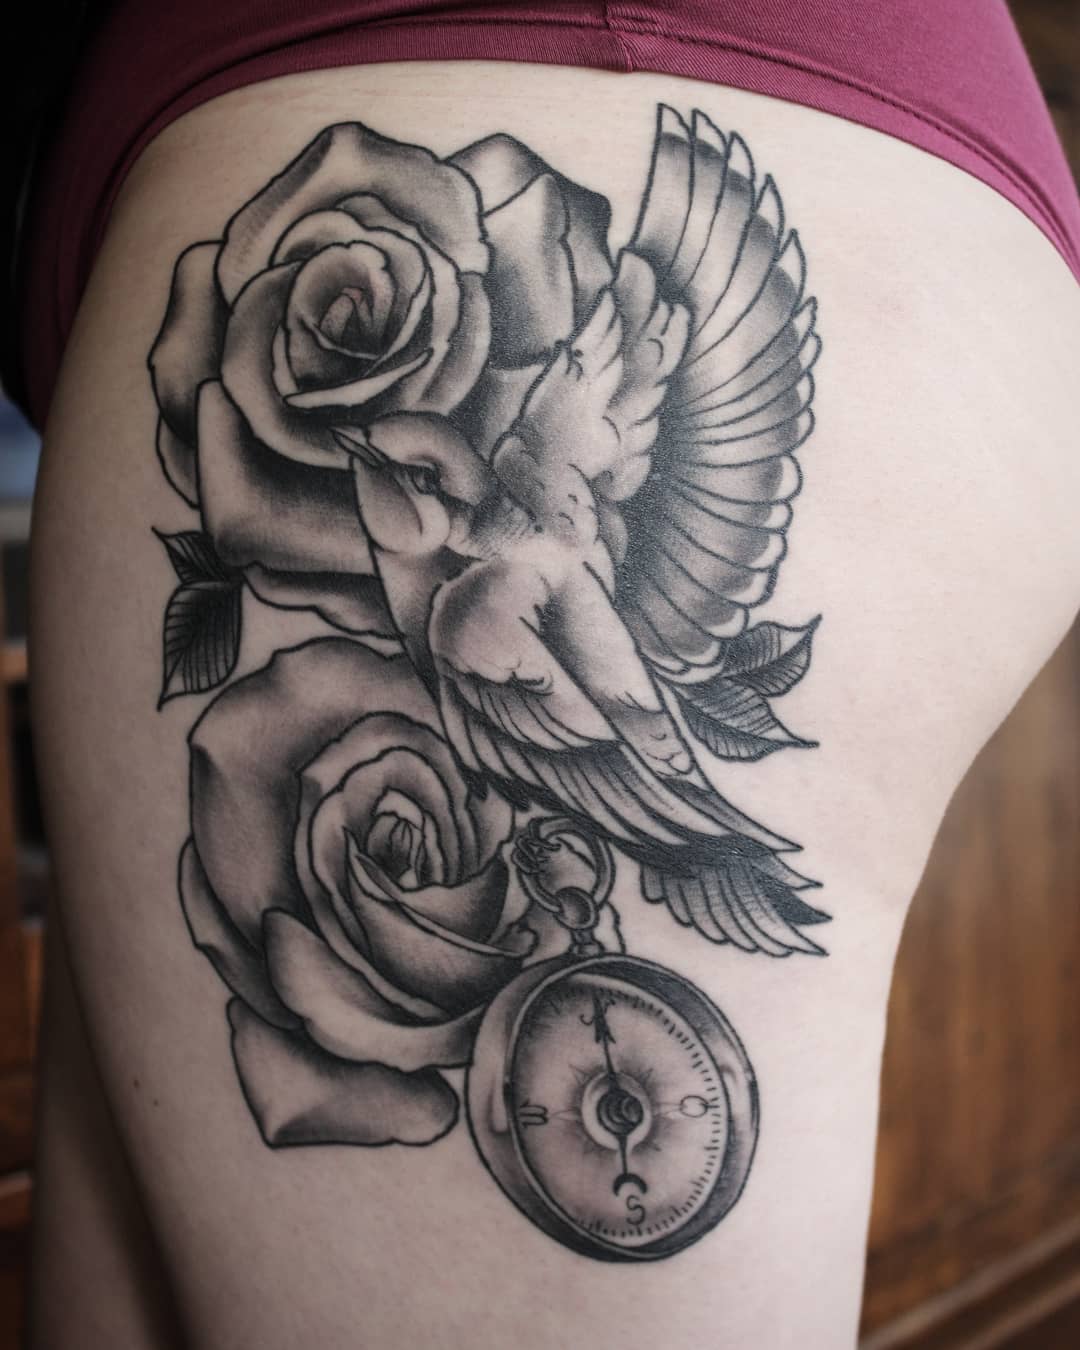 Healed birdy. Thanks to my wonderful customer!
#germantattooers #tattooworkers #